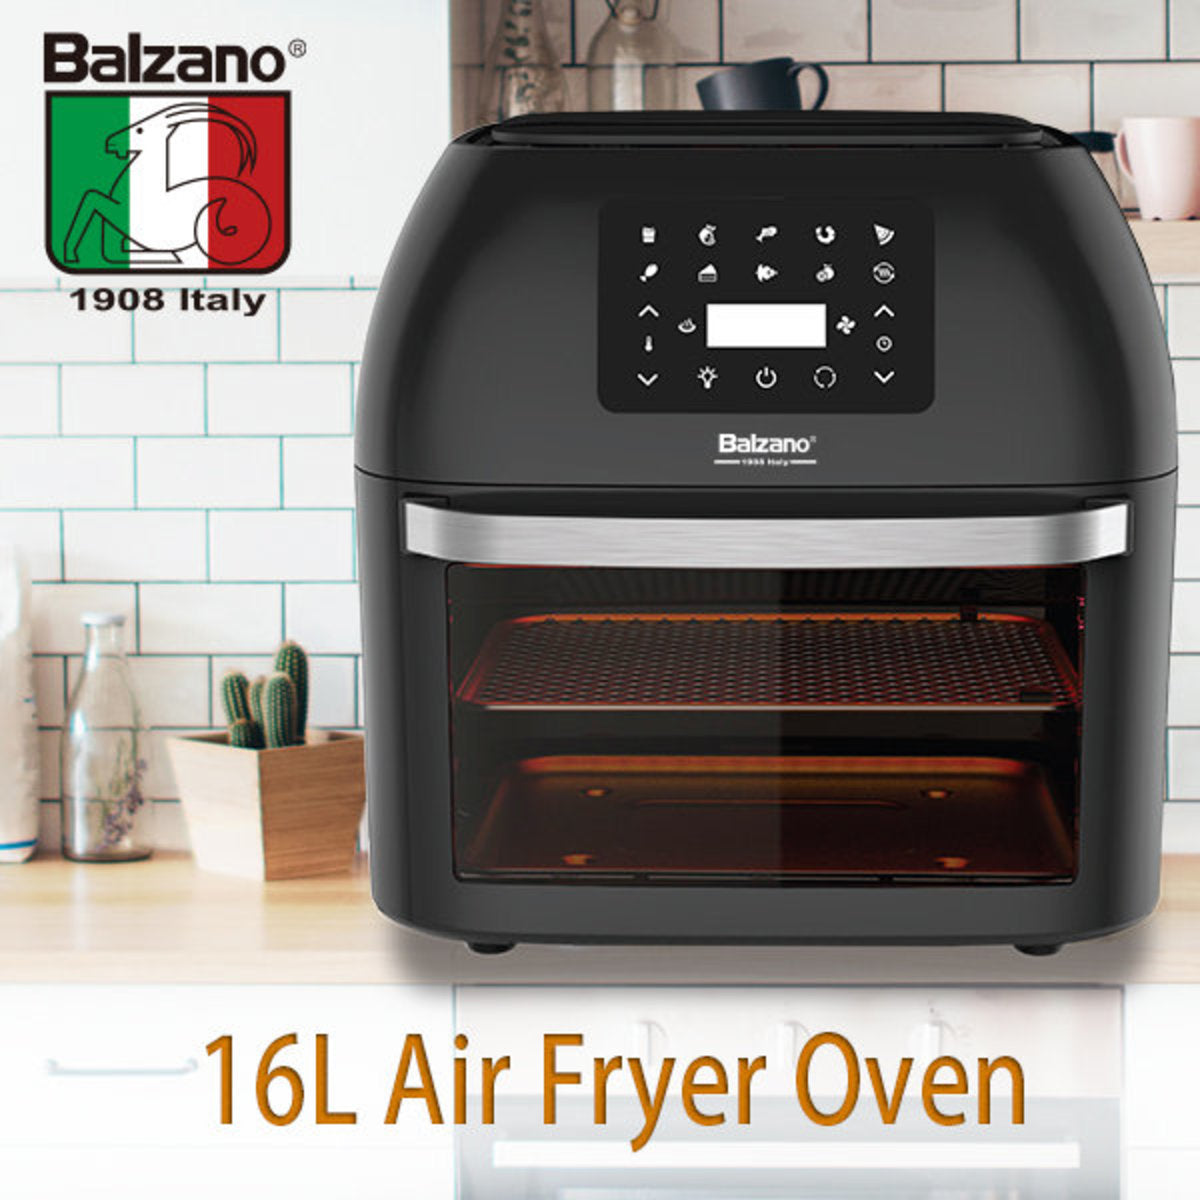 16L 空氣炸鍋烤箱 Air Fryer Oven 送烘焙工具3套裝